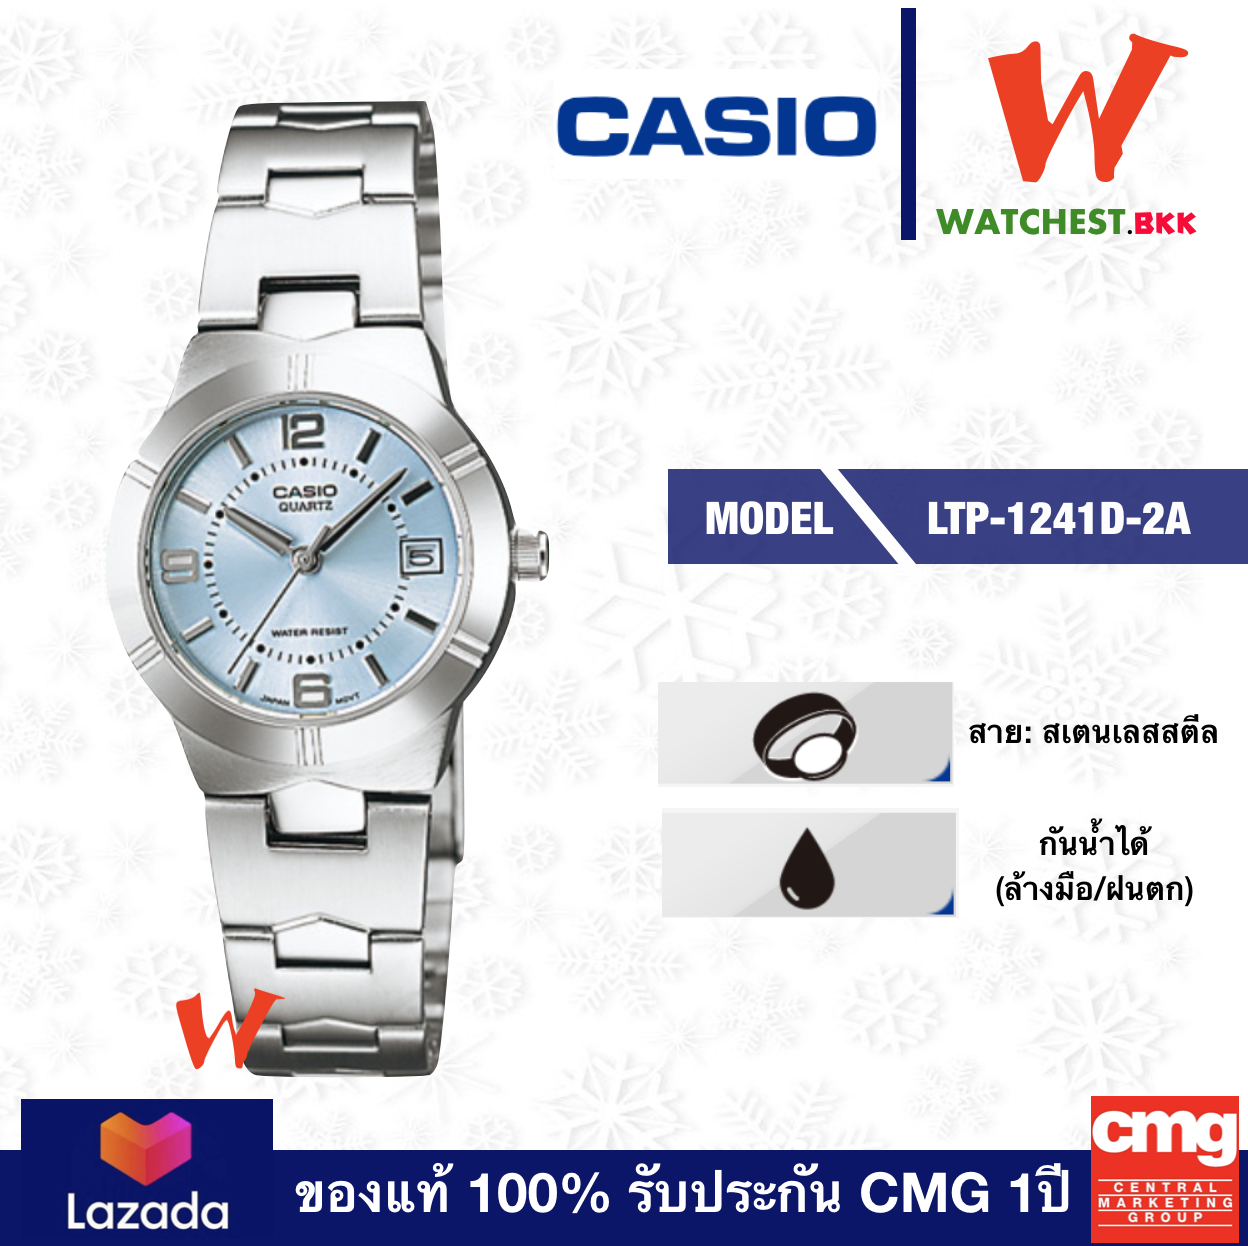 casio นาฬิกาผู้หญิง สายสเตนเลส รุ่น LTP-1241D-2A, คาสิโอ้ LTP1241 ตัวล็อคแบบบานพับ (watchestbkk คาสิโอ แท้ ของแท้100% ประกัน CMG)